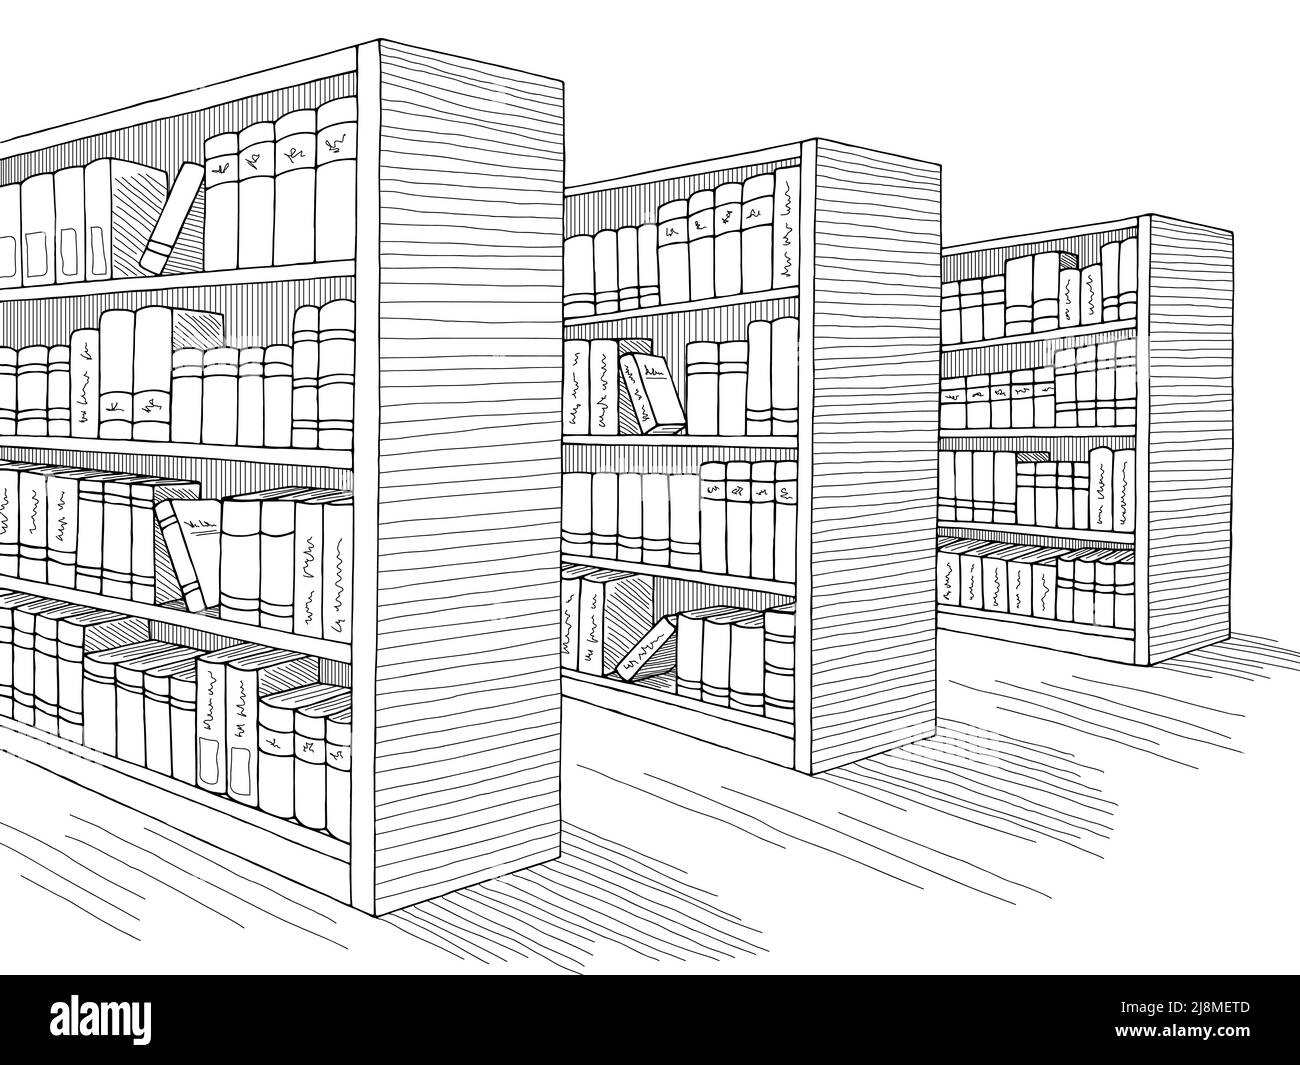 Bibliothek Regal Grafik schwarz weiß Innenraum Skizze Illustration Vektor Stock Vektor